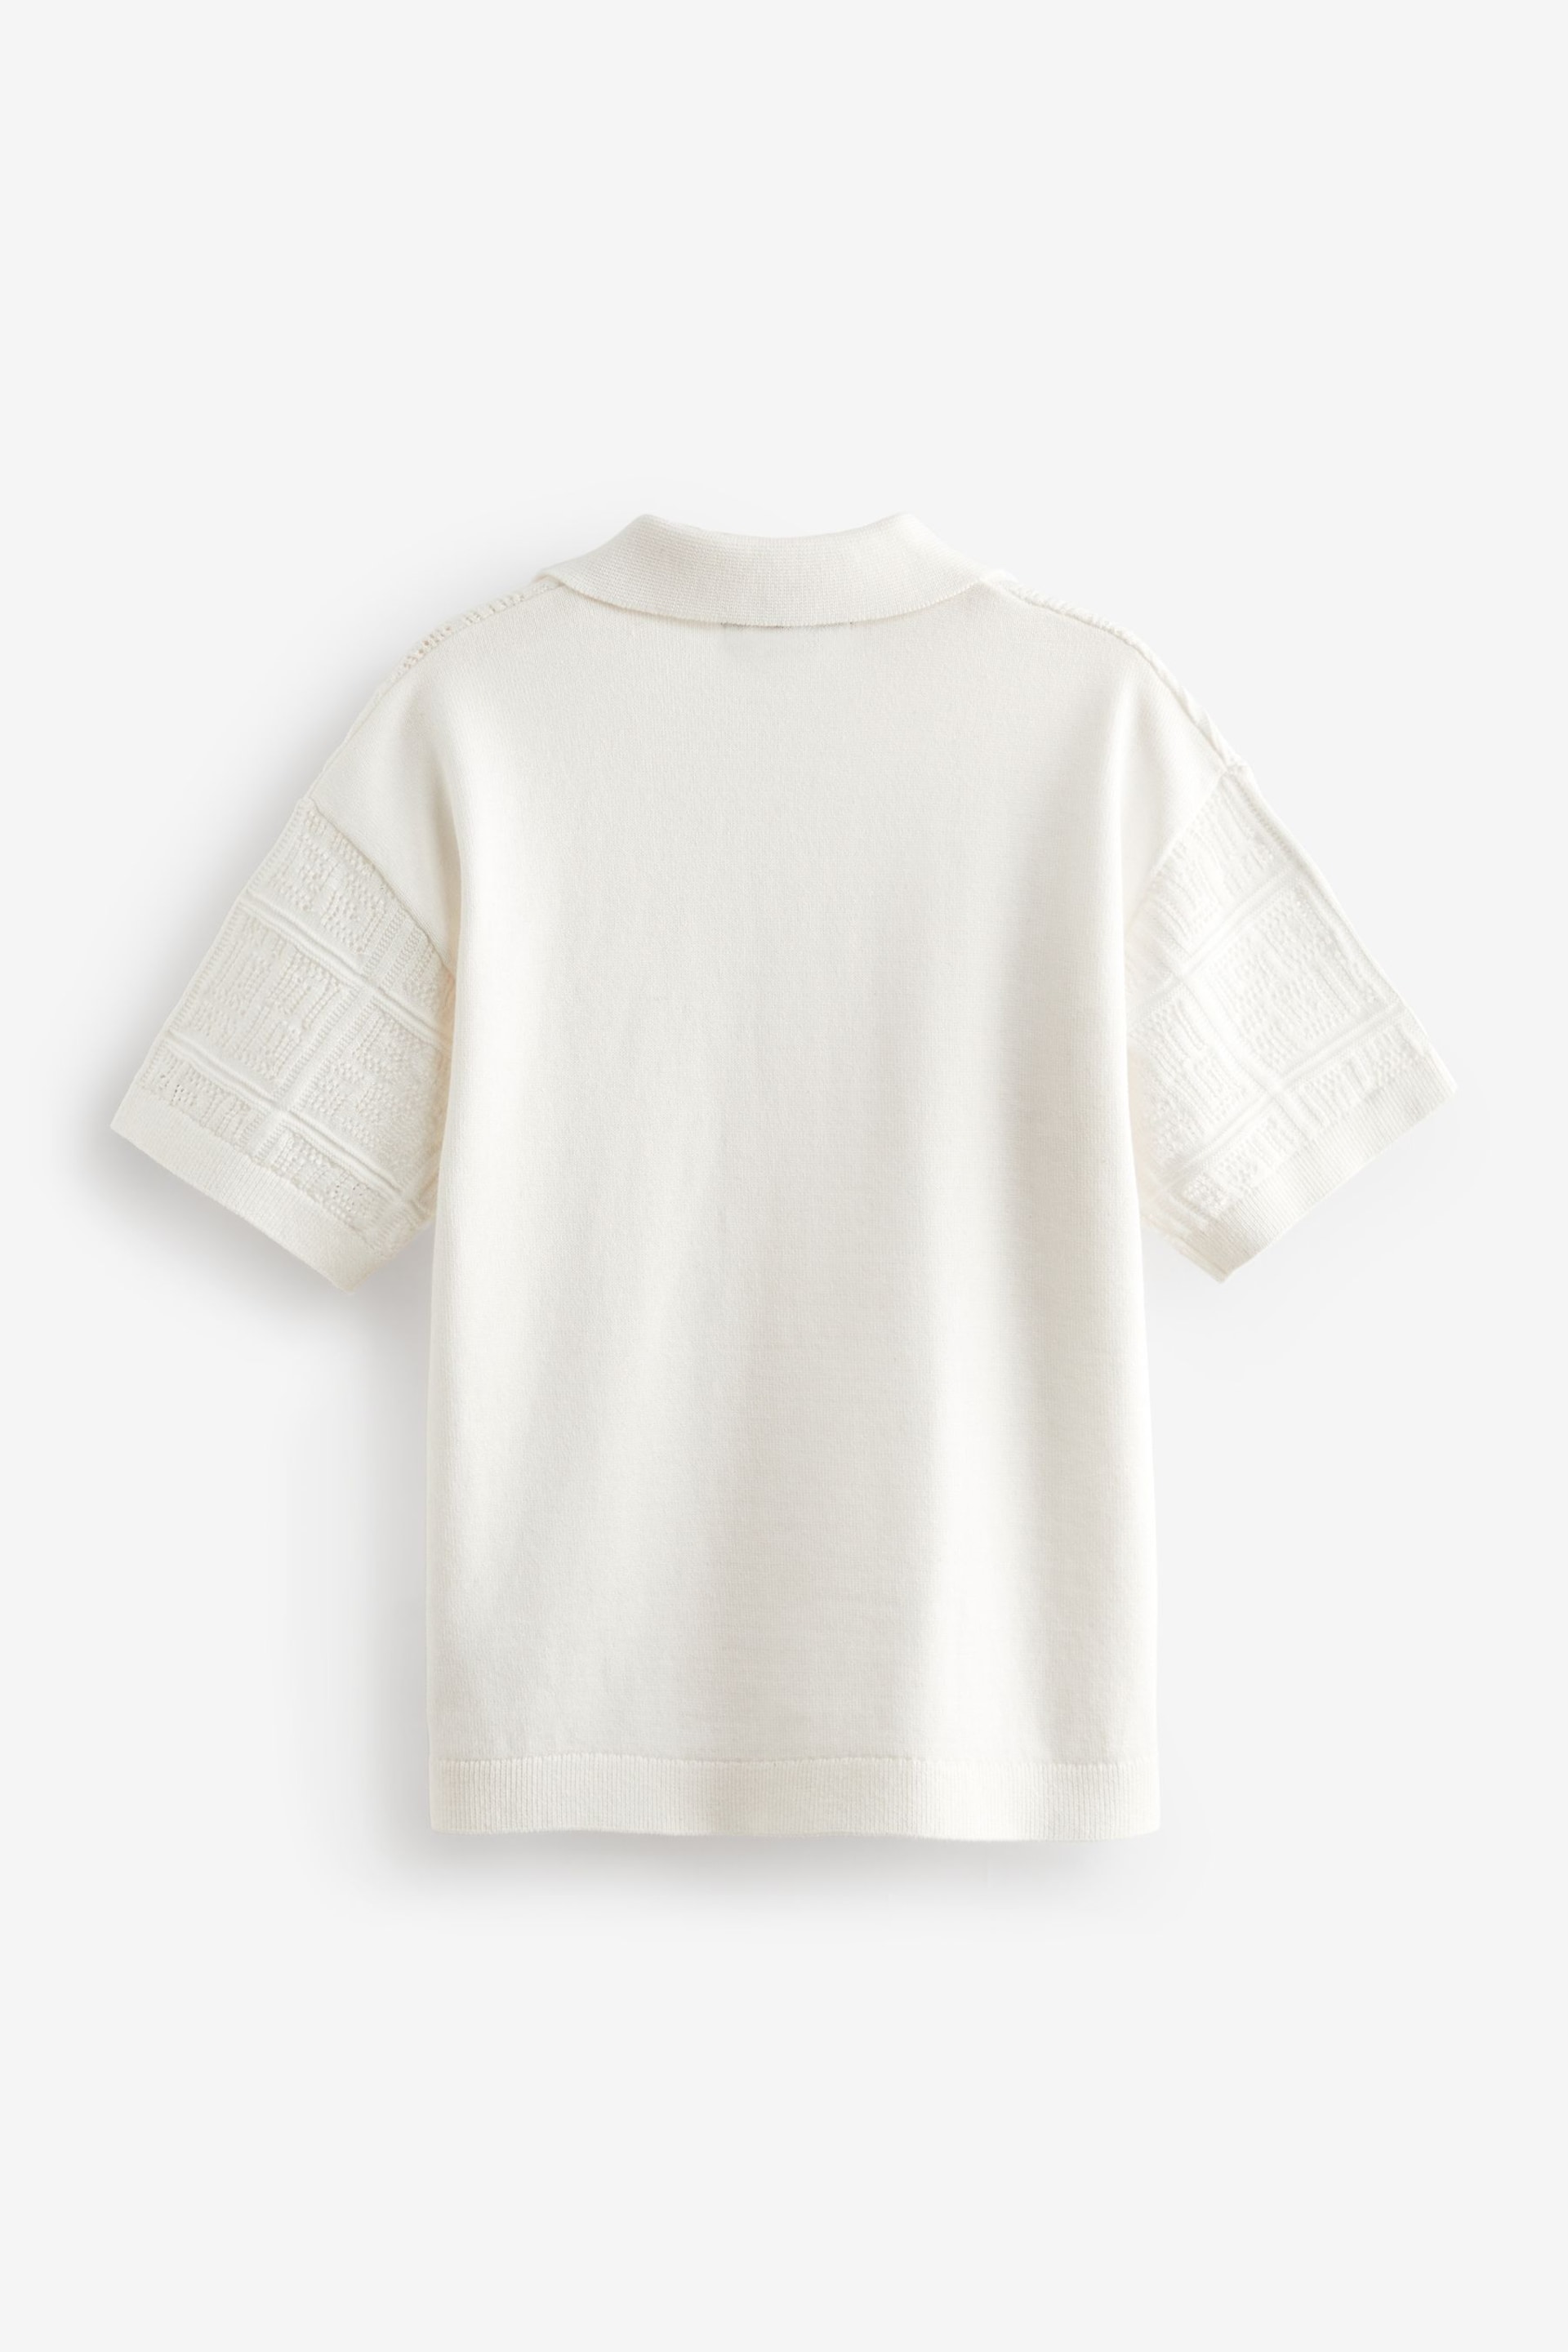 White Short Sleeve Textured Knit Shirt (3-16yrs) - Image 3 of 4